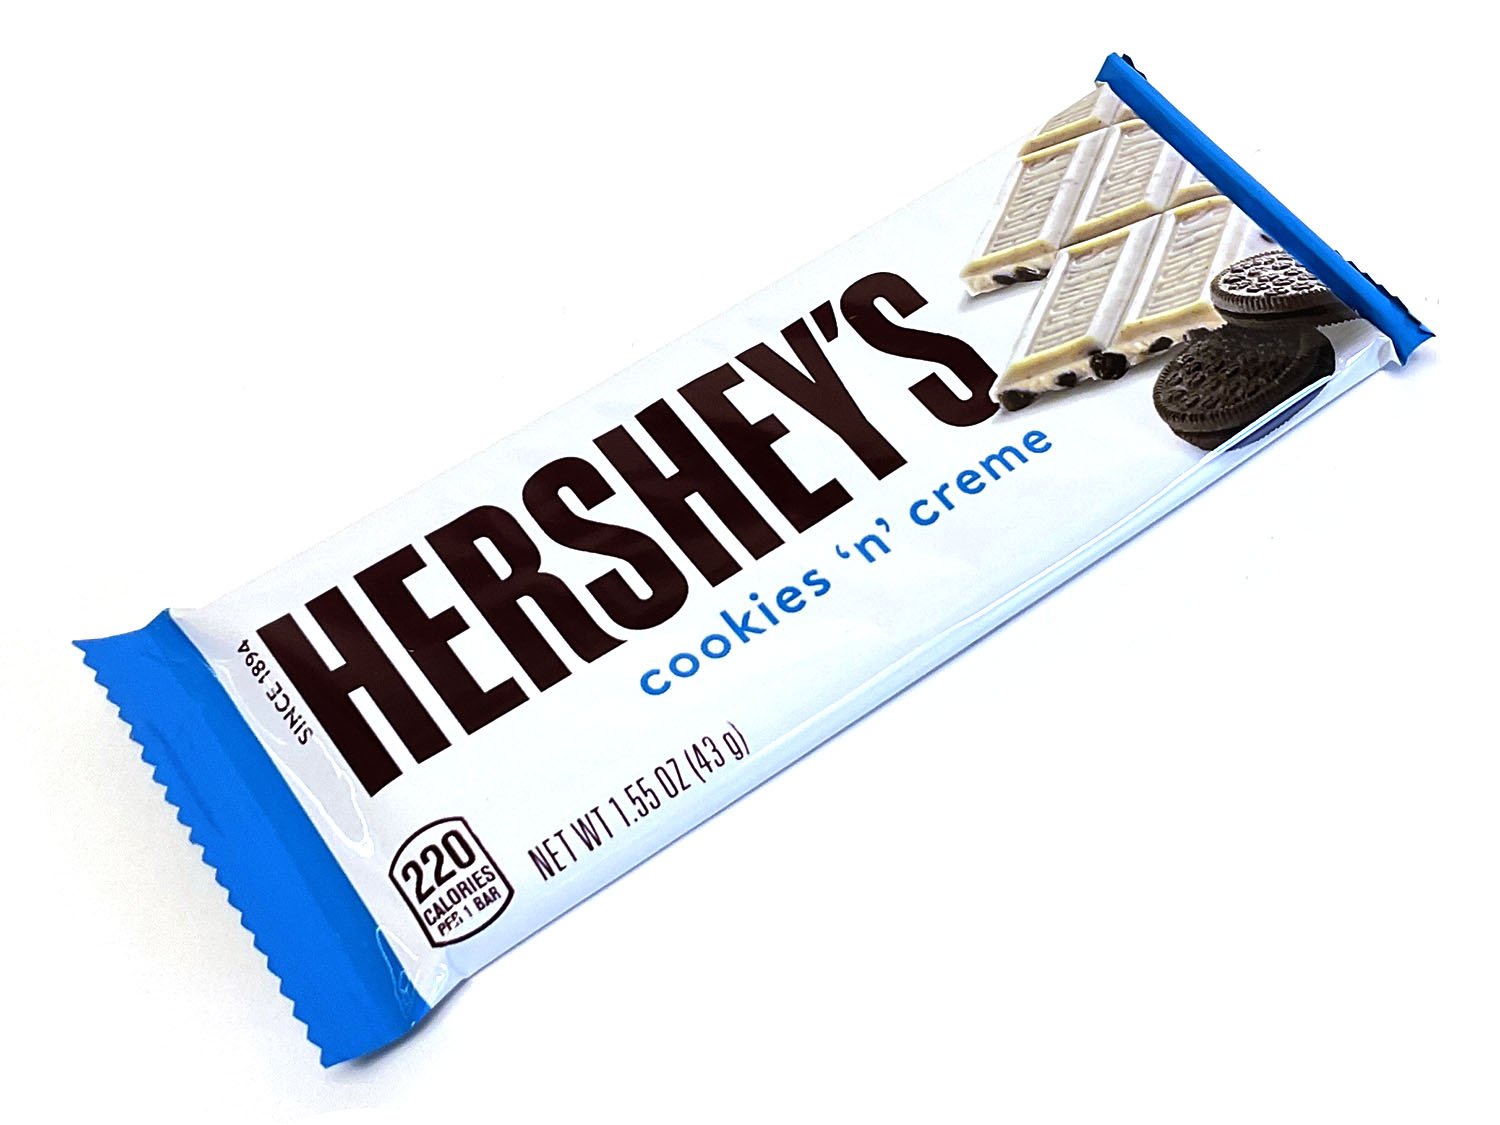 Hershey's Cookies 'n' Creme - 1.55 oz bar